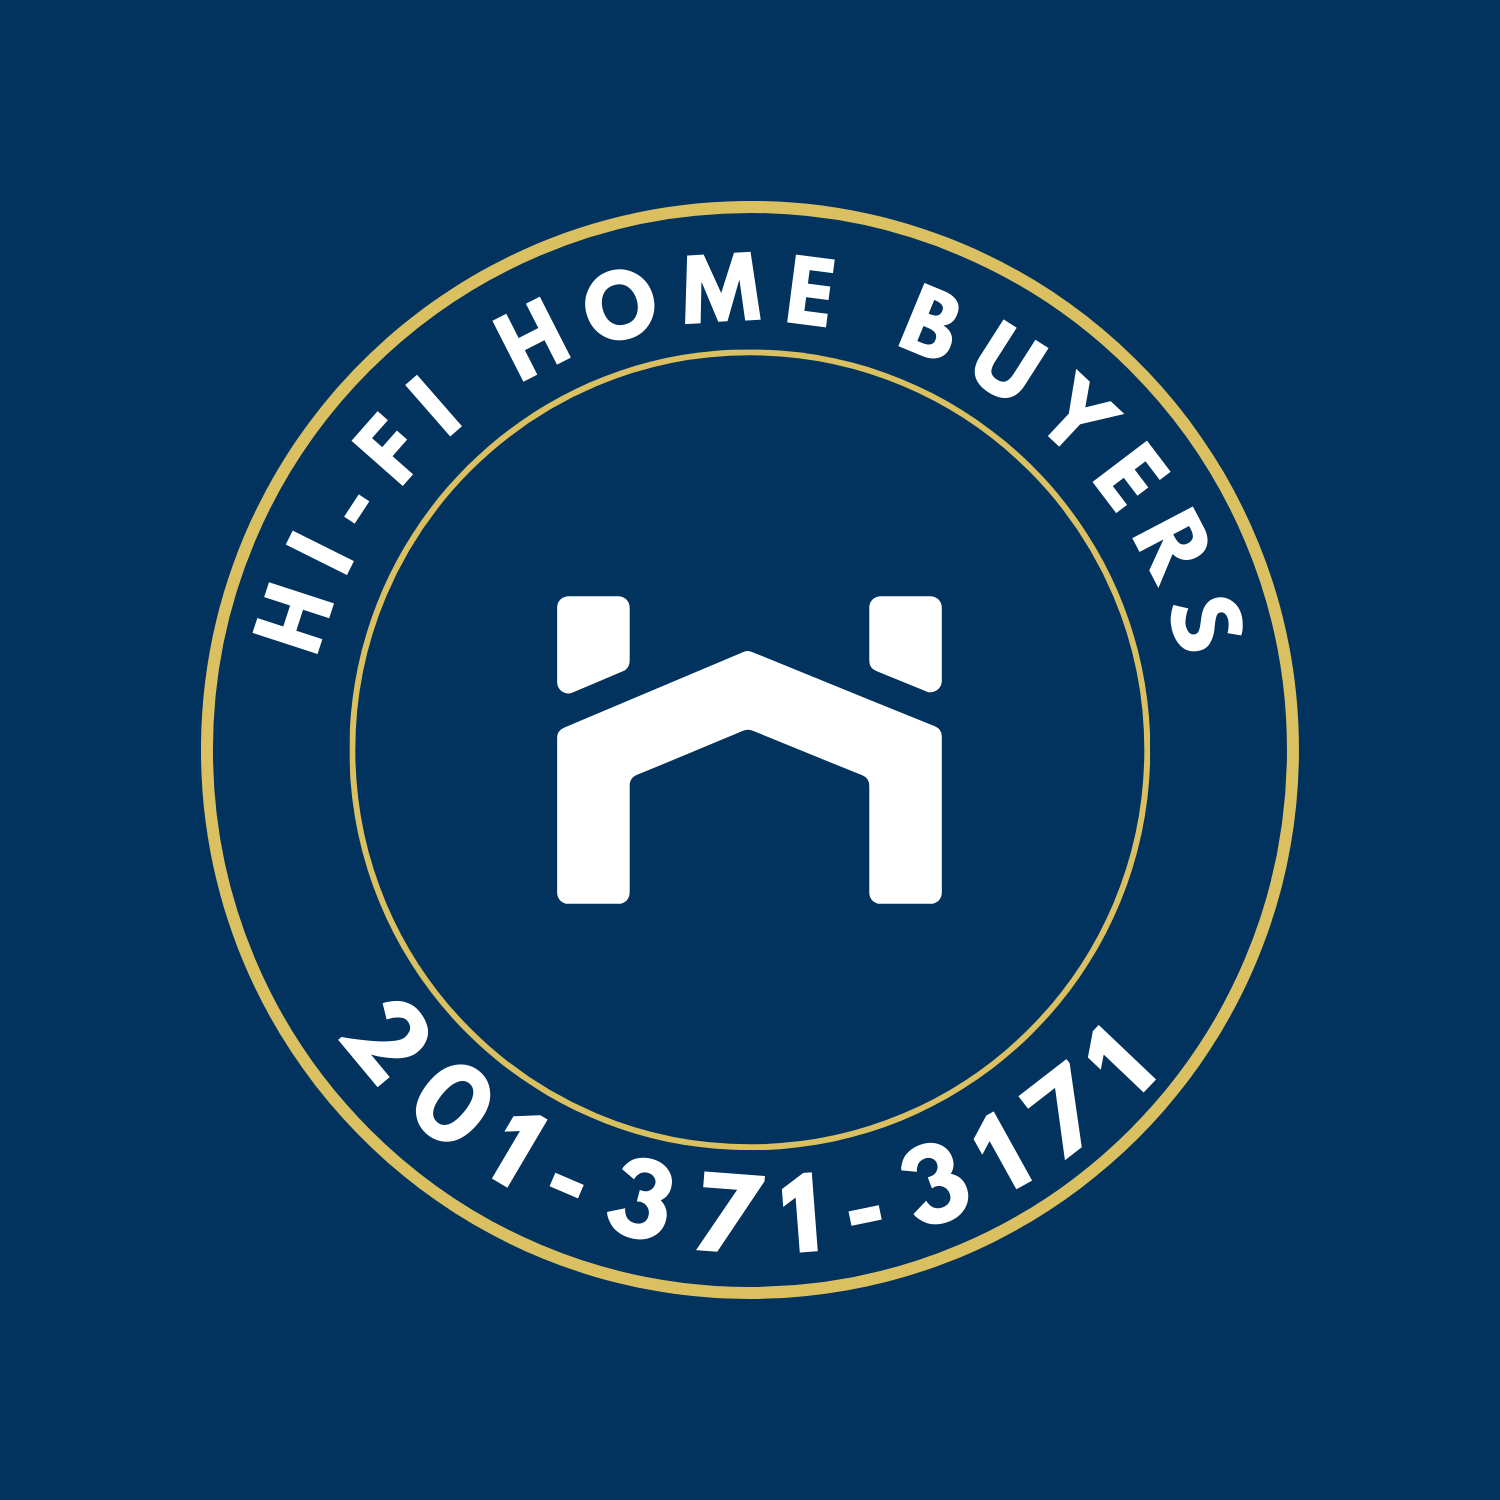 HI FI Home Buyers